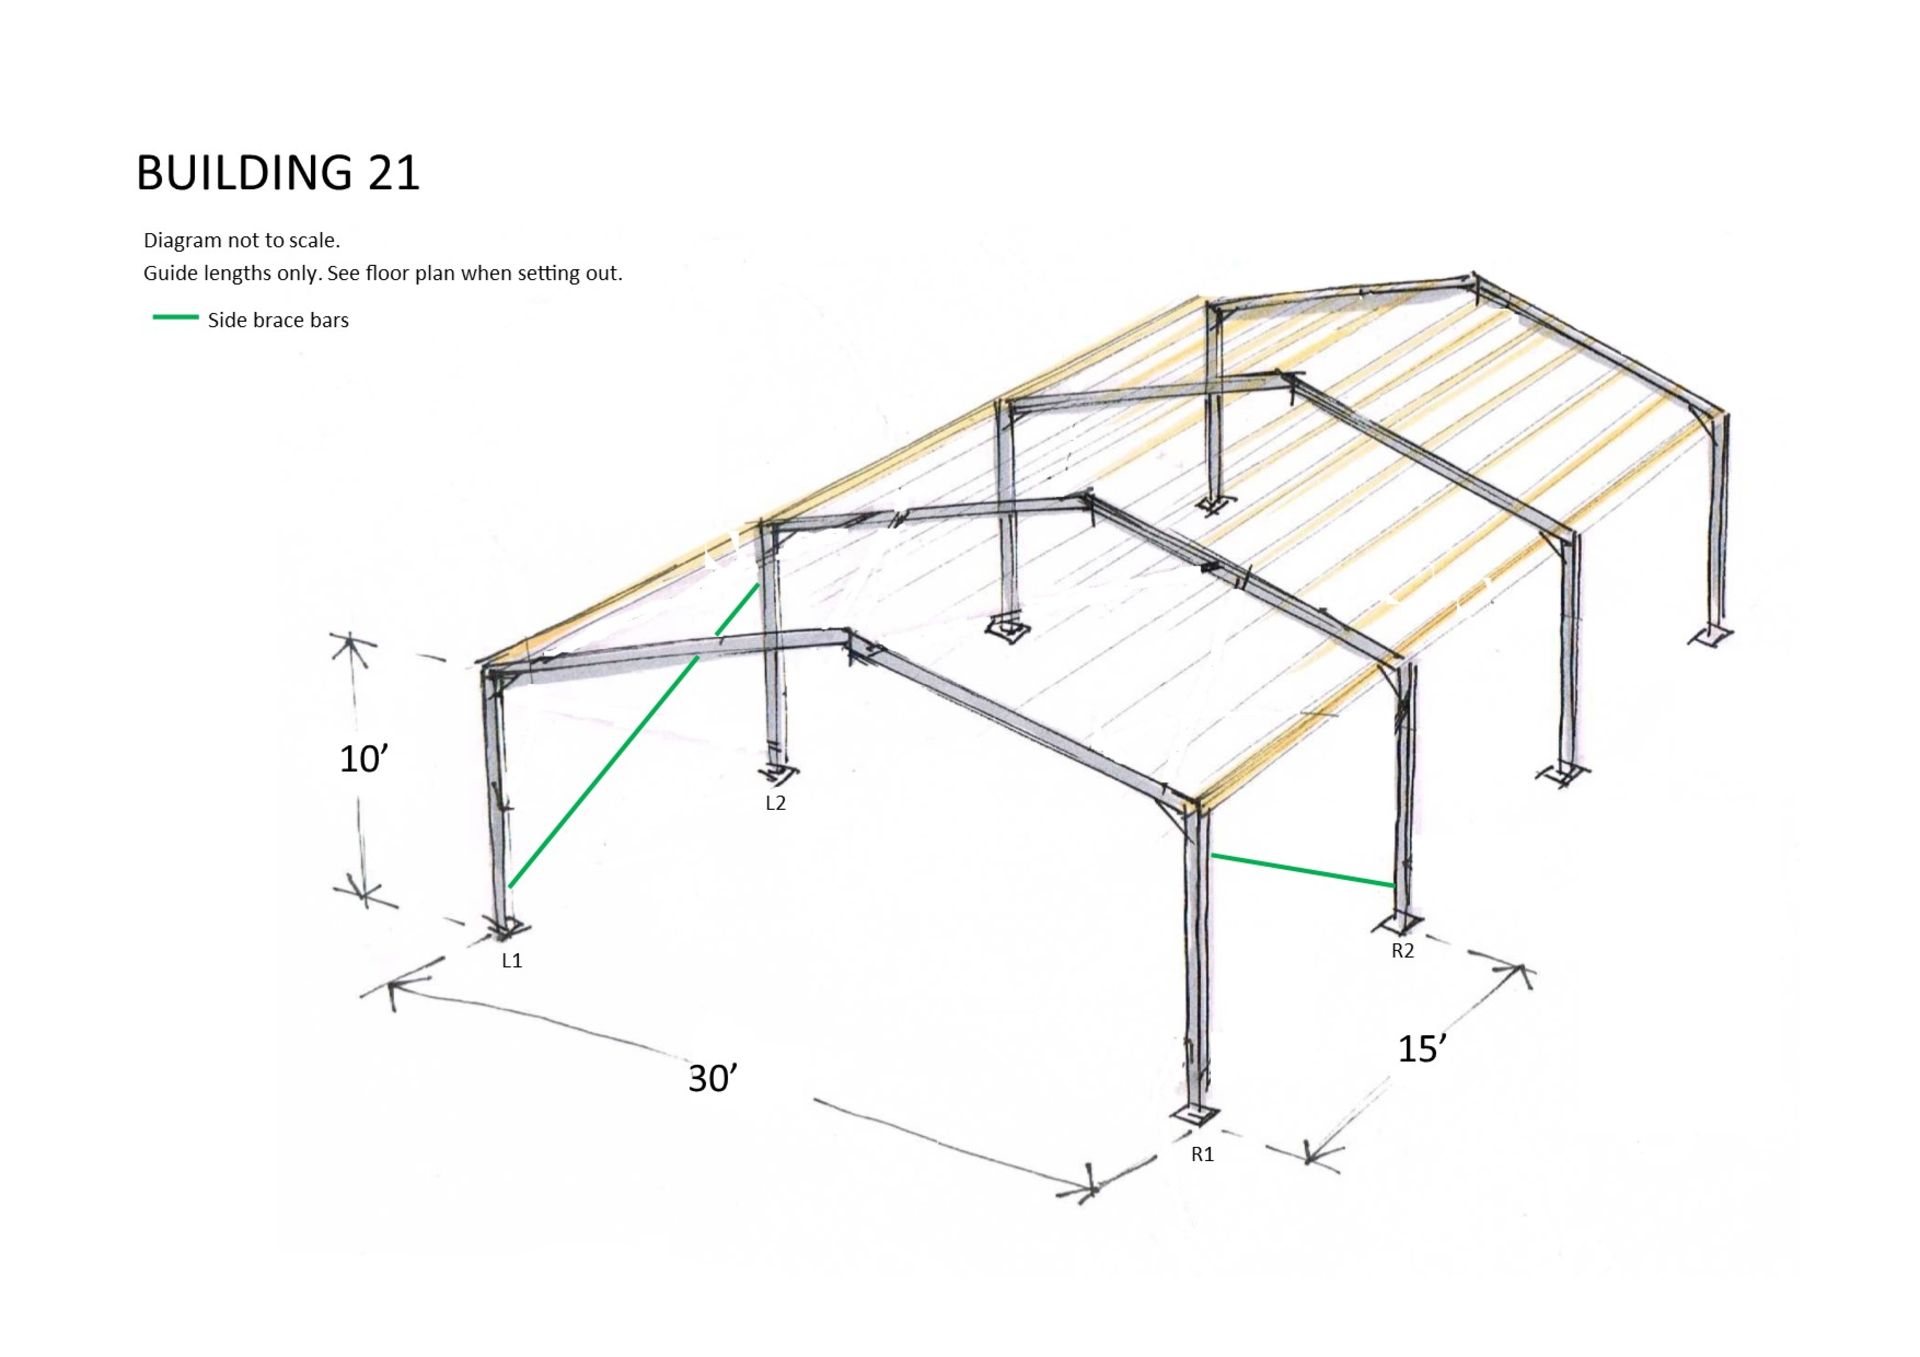 Steel framed building 45ft long x 30 ft wide x 10 ft @ eaves 12 .5 deg roof pitch - Image 8 of 9